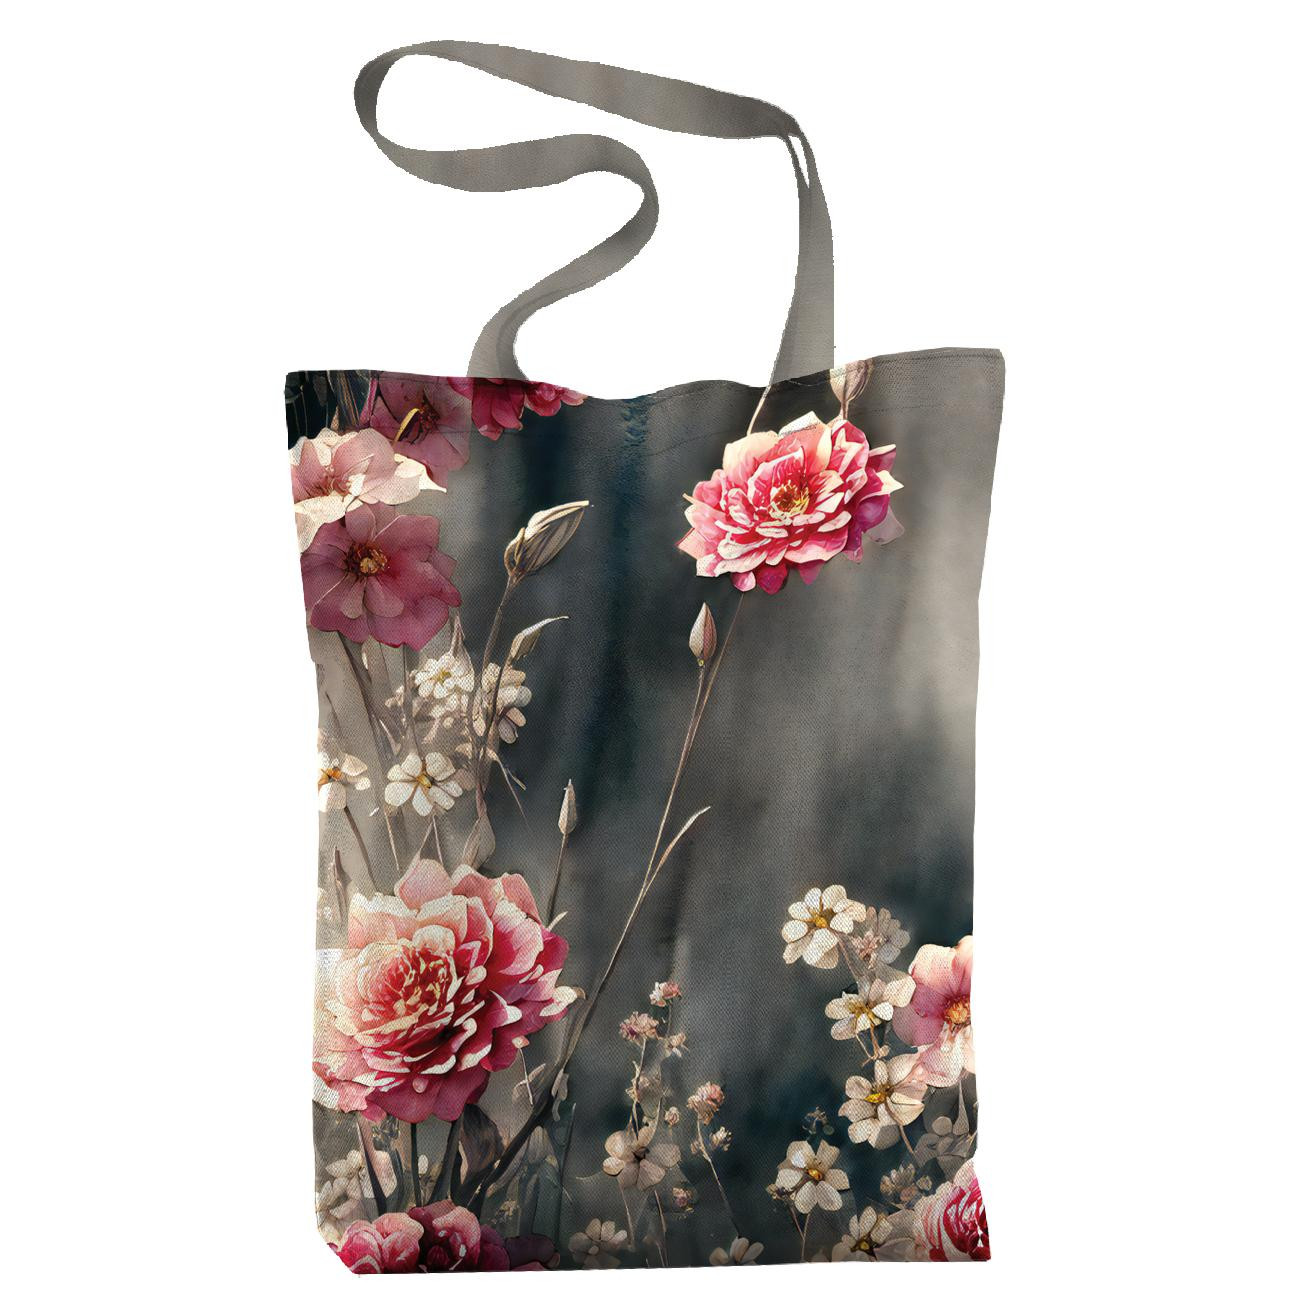 SHOPPER BAG - VINTAGE FLOWERS pat. 10 - sewing set